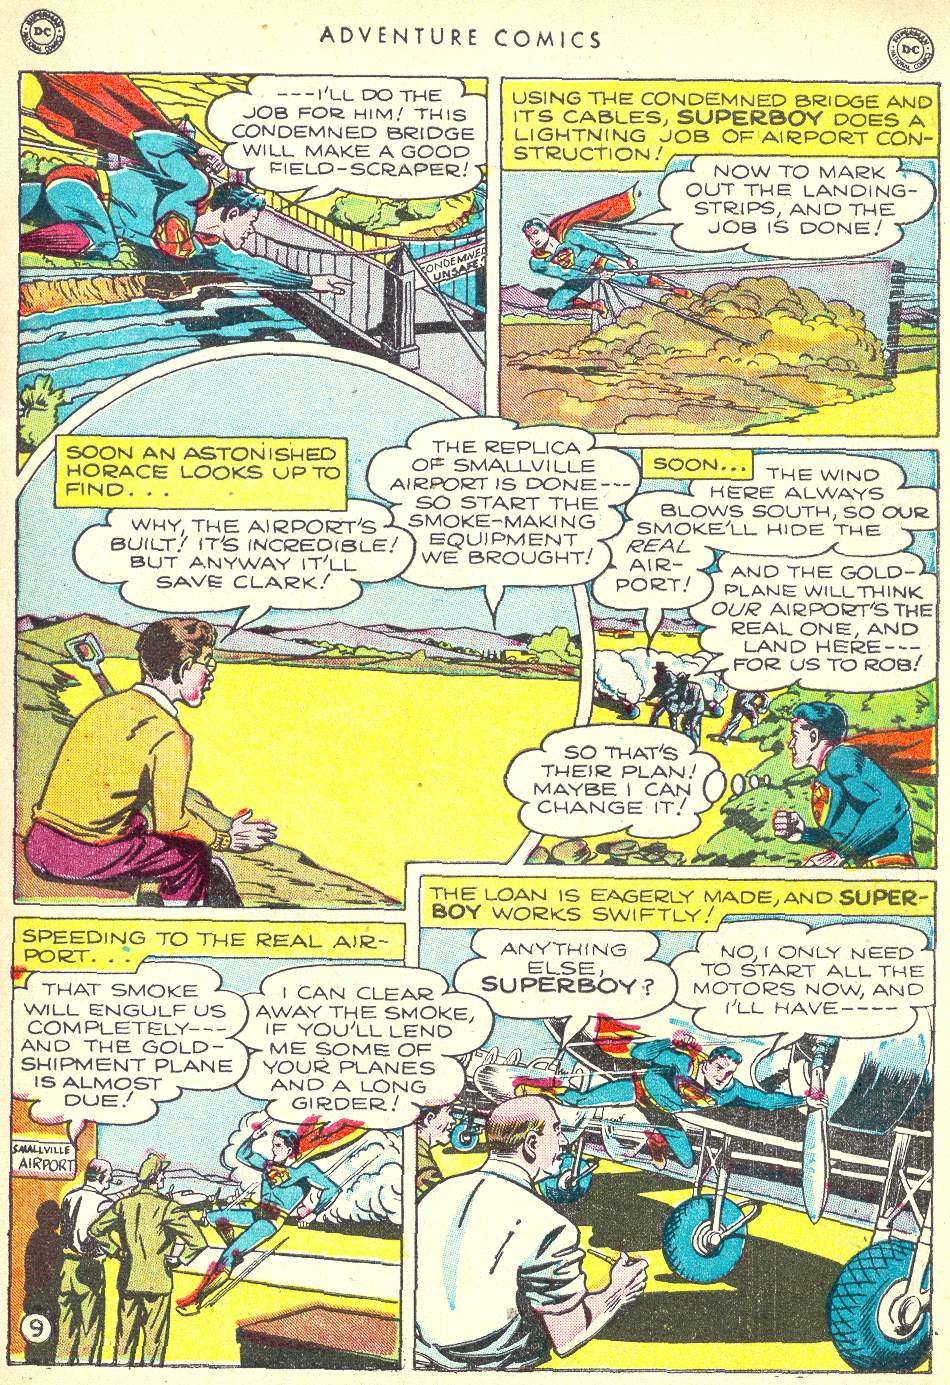 Adventure Comics (1938) 146 Page 10